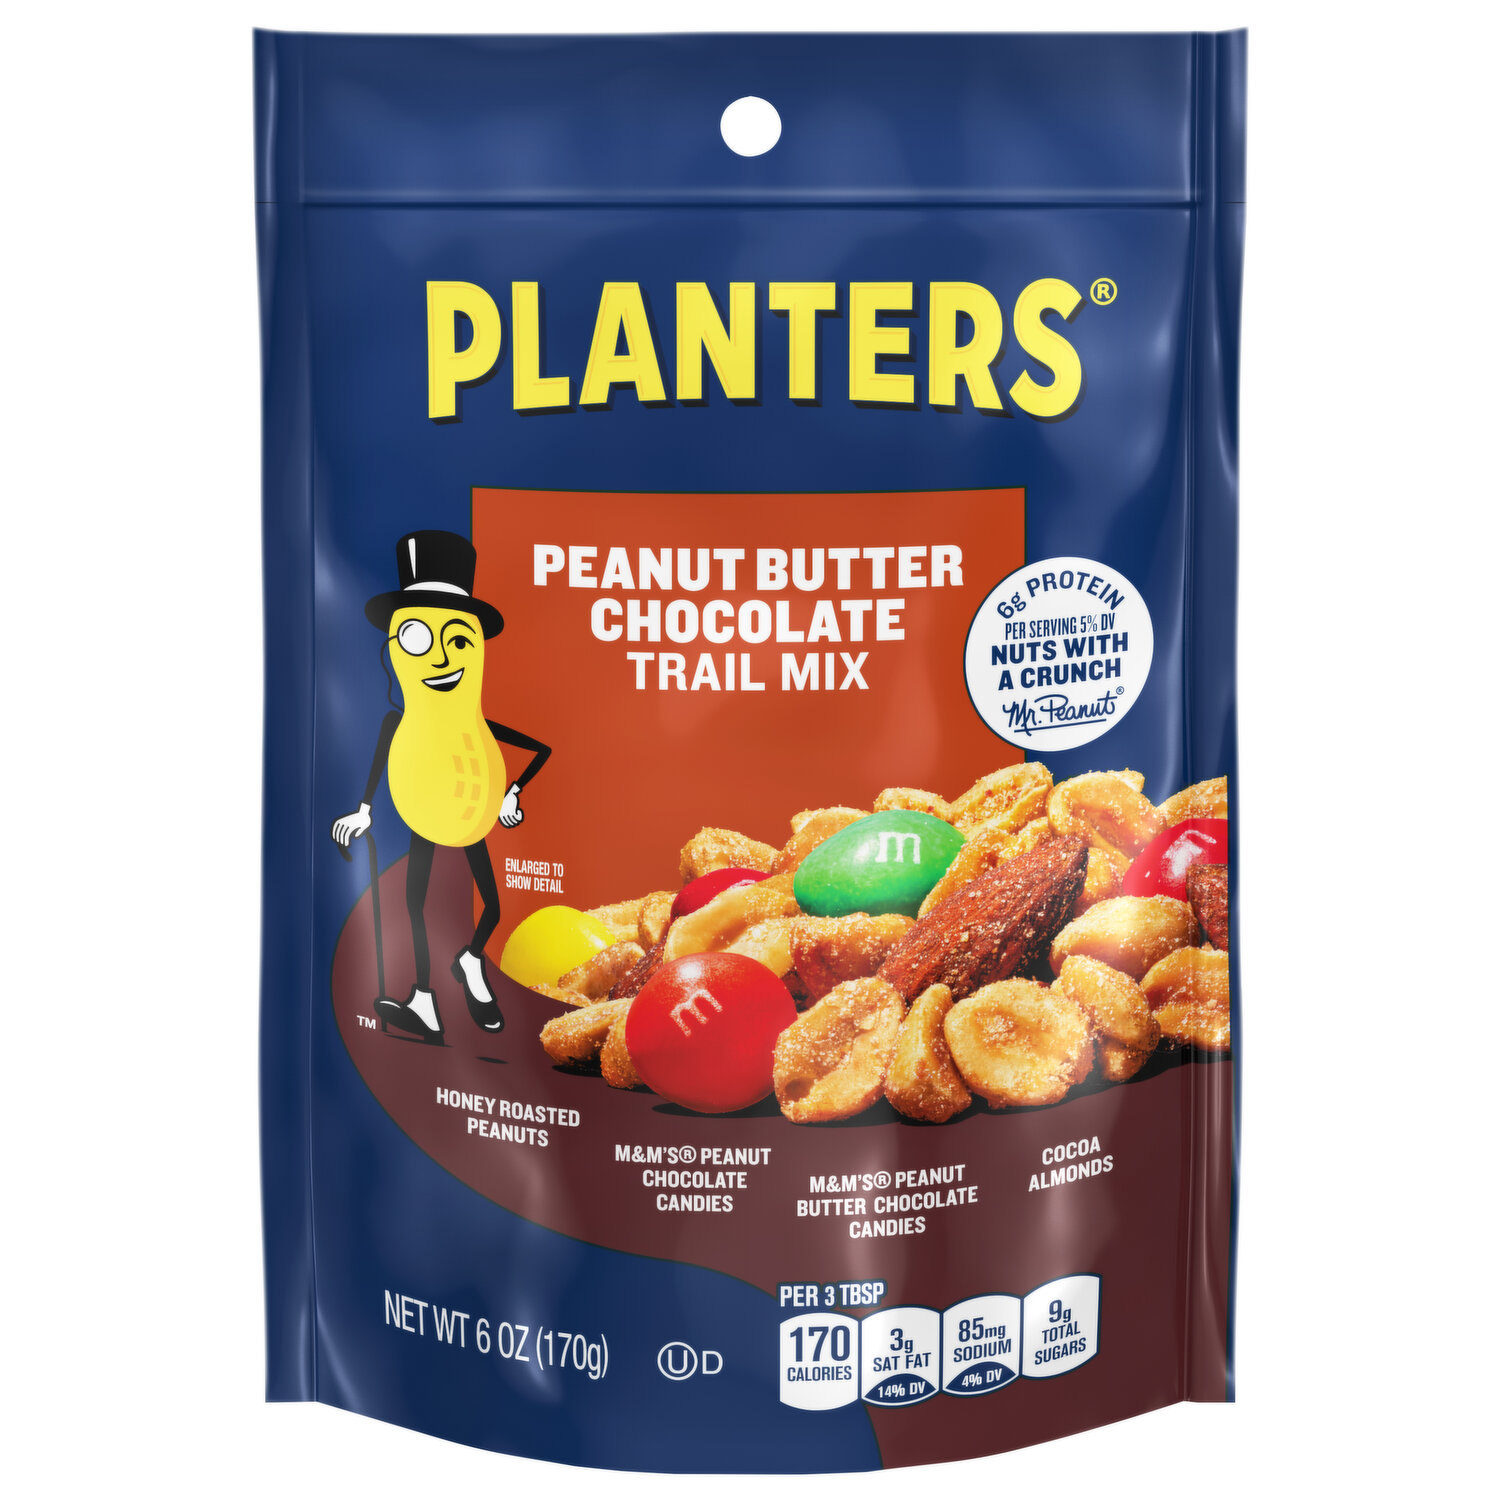 Nut Harvest Honey Roasted Mix 5.5 Ounce Plastic Bag, Shop